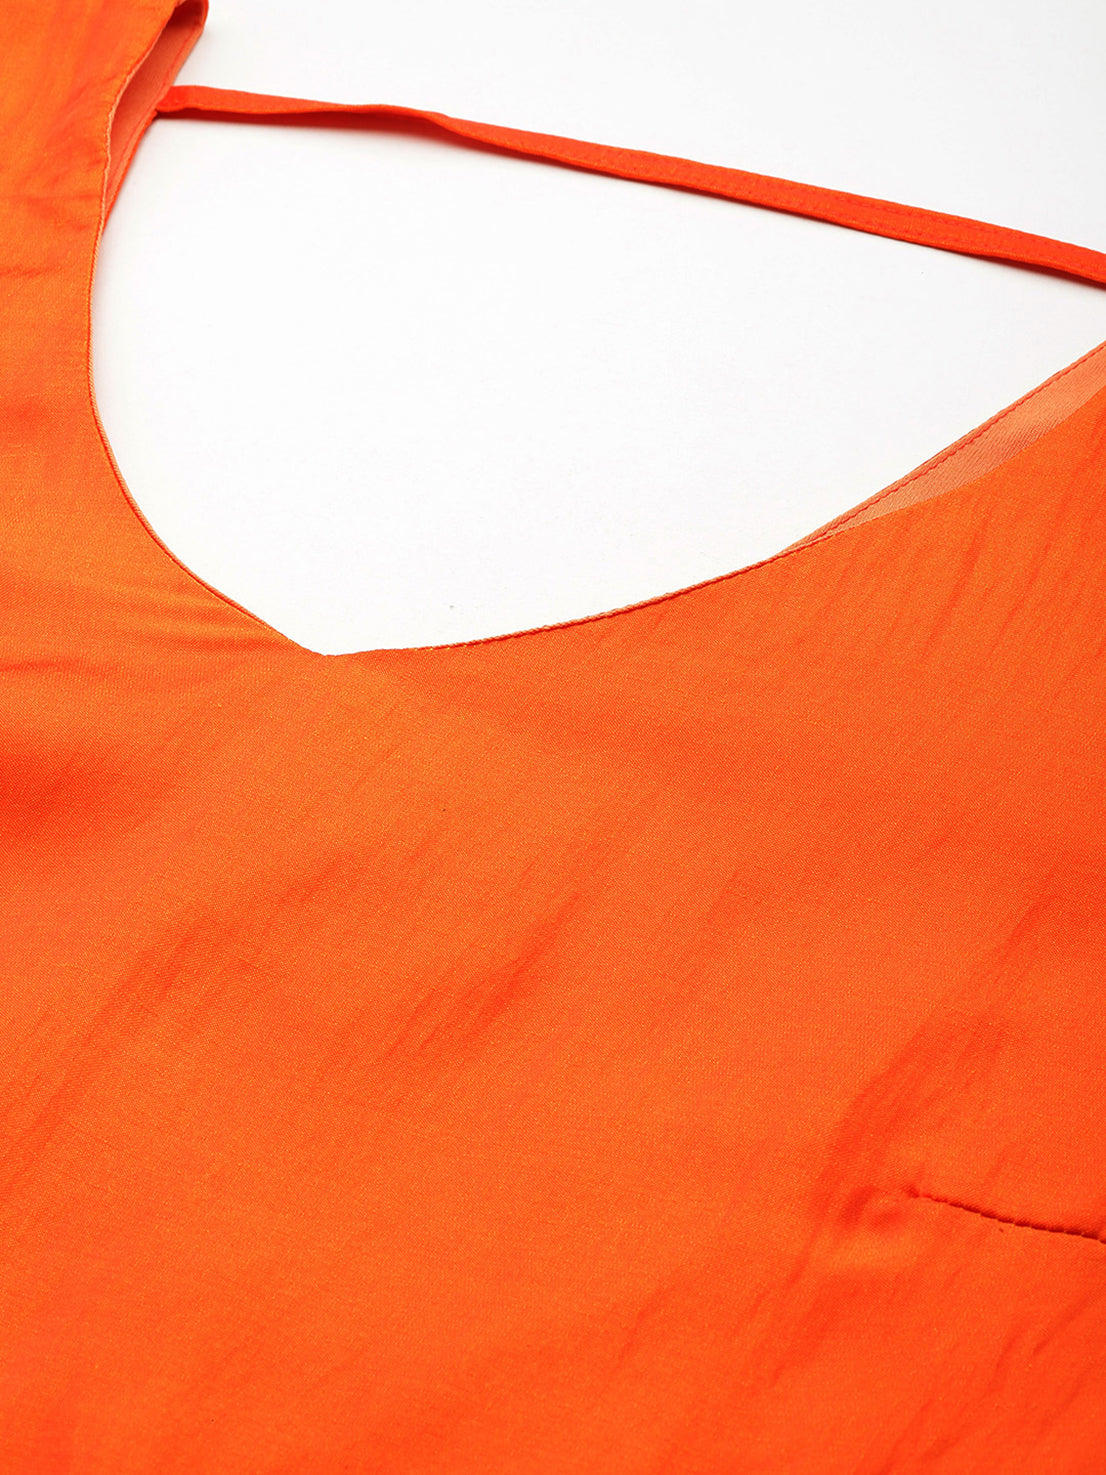 Orange silk A-line party dress